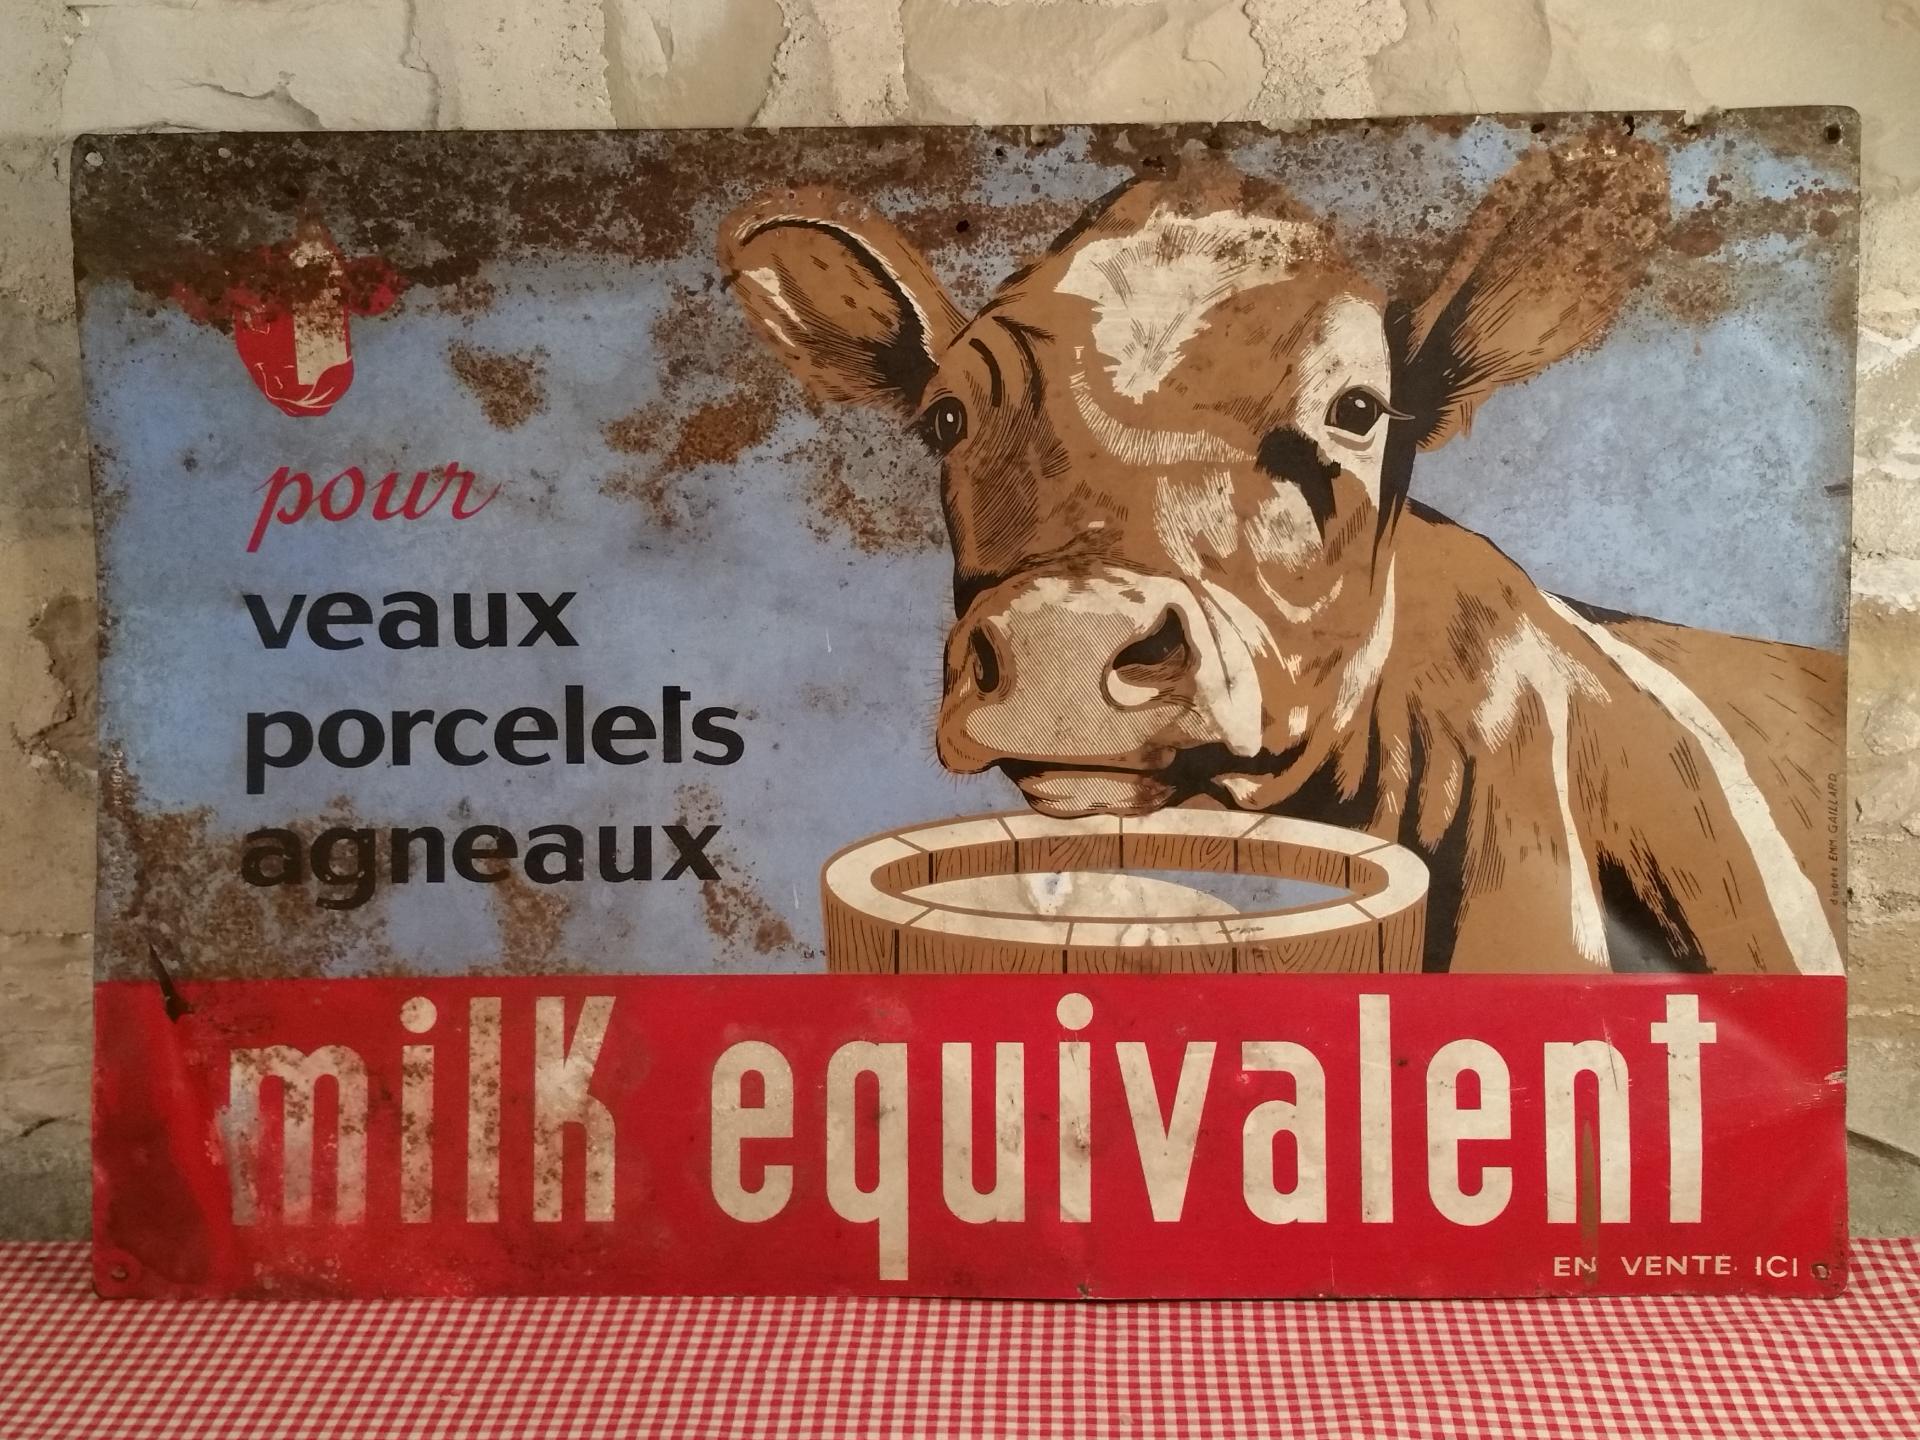 3 lbc tole milk equivalent